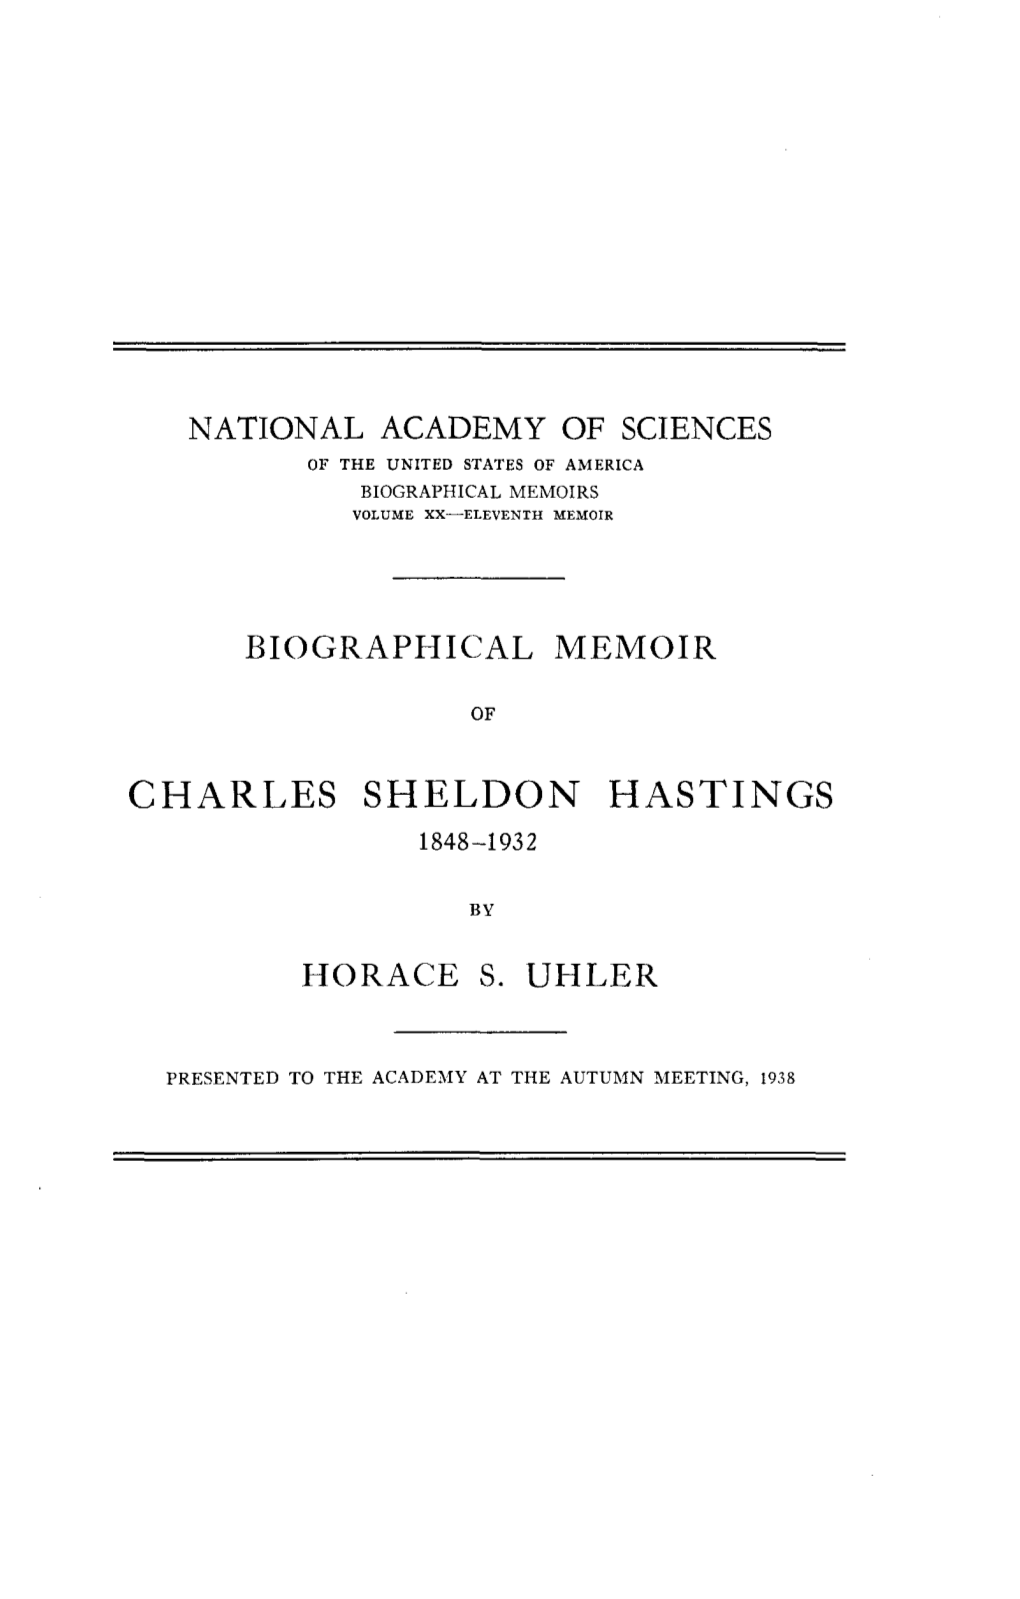 Charles Sheldon Hastings 1848-1932